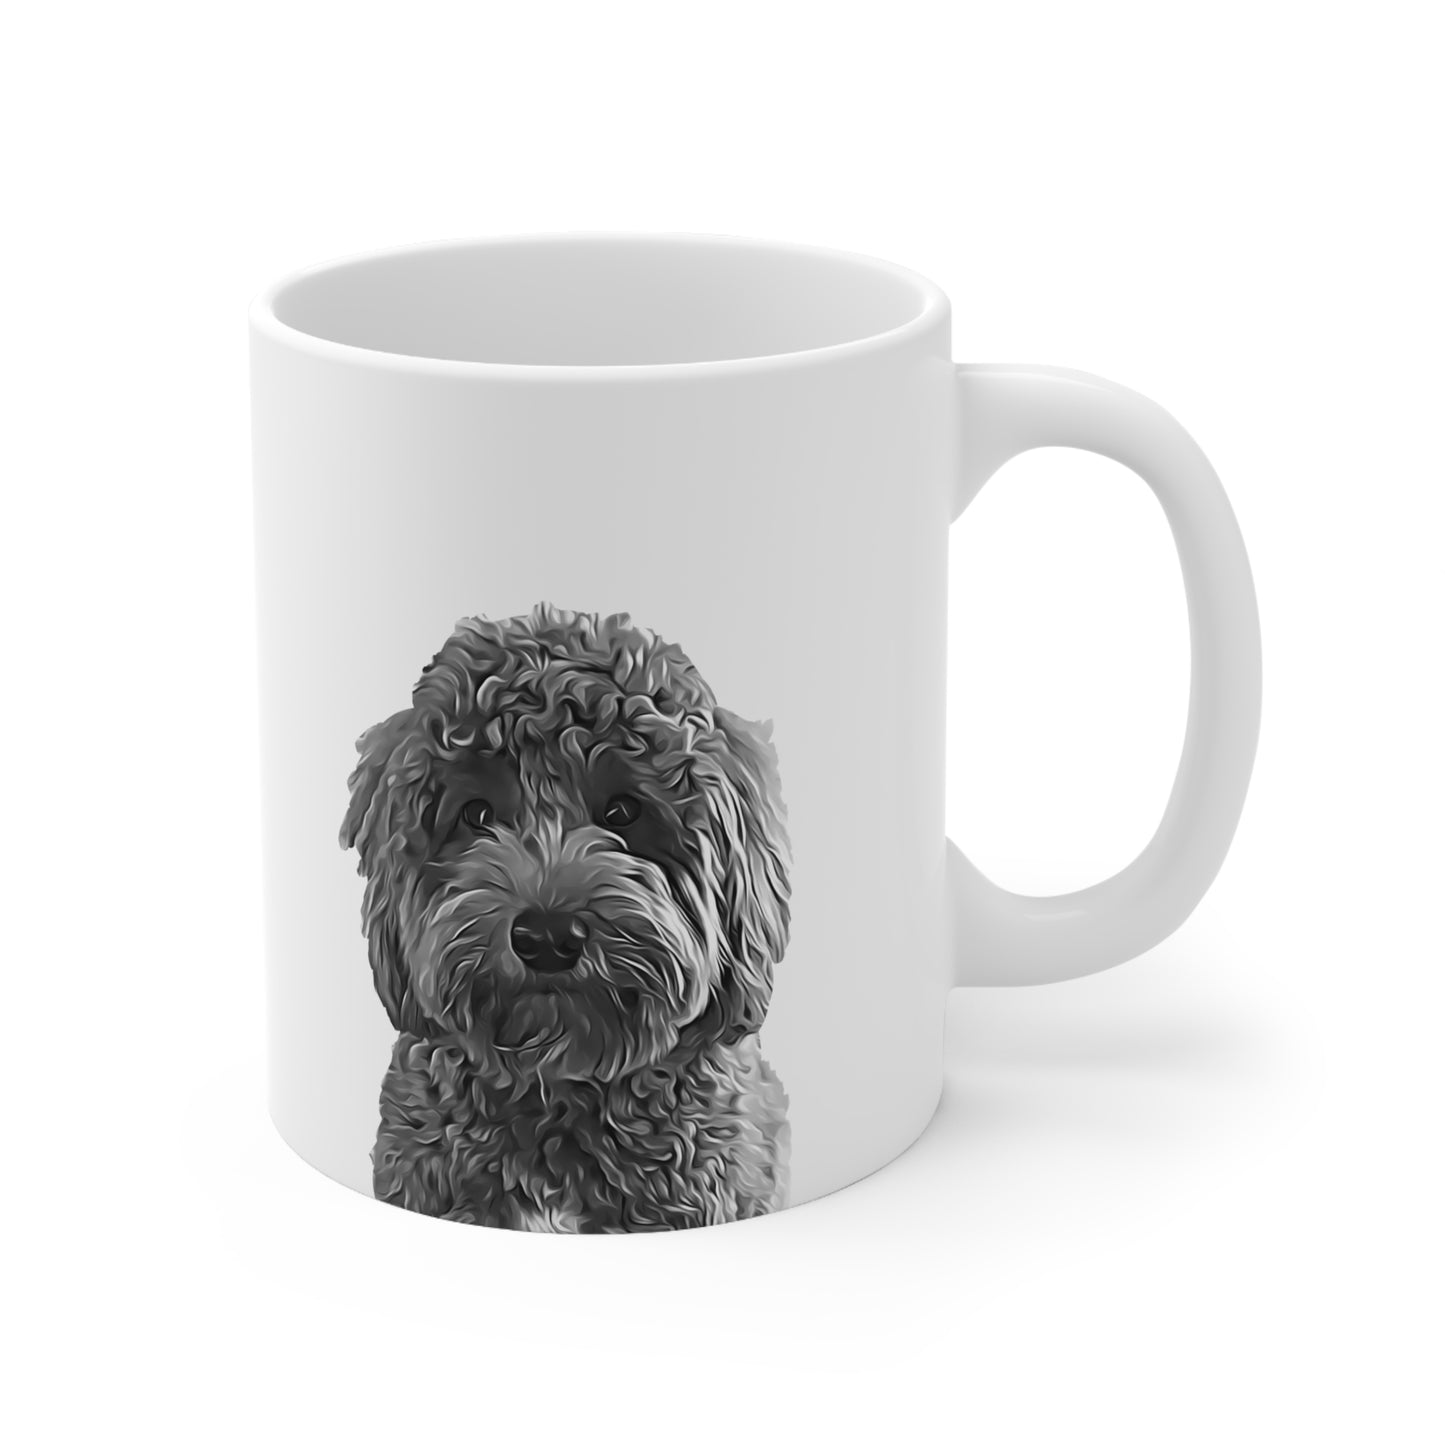 Pet Portrait Ceramic Mug